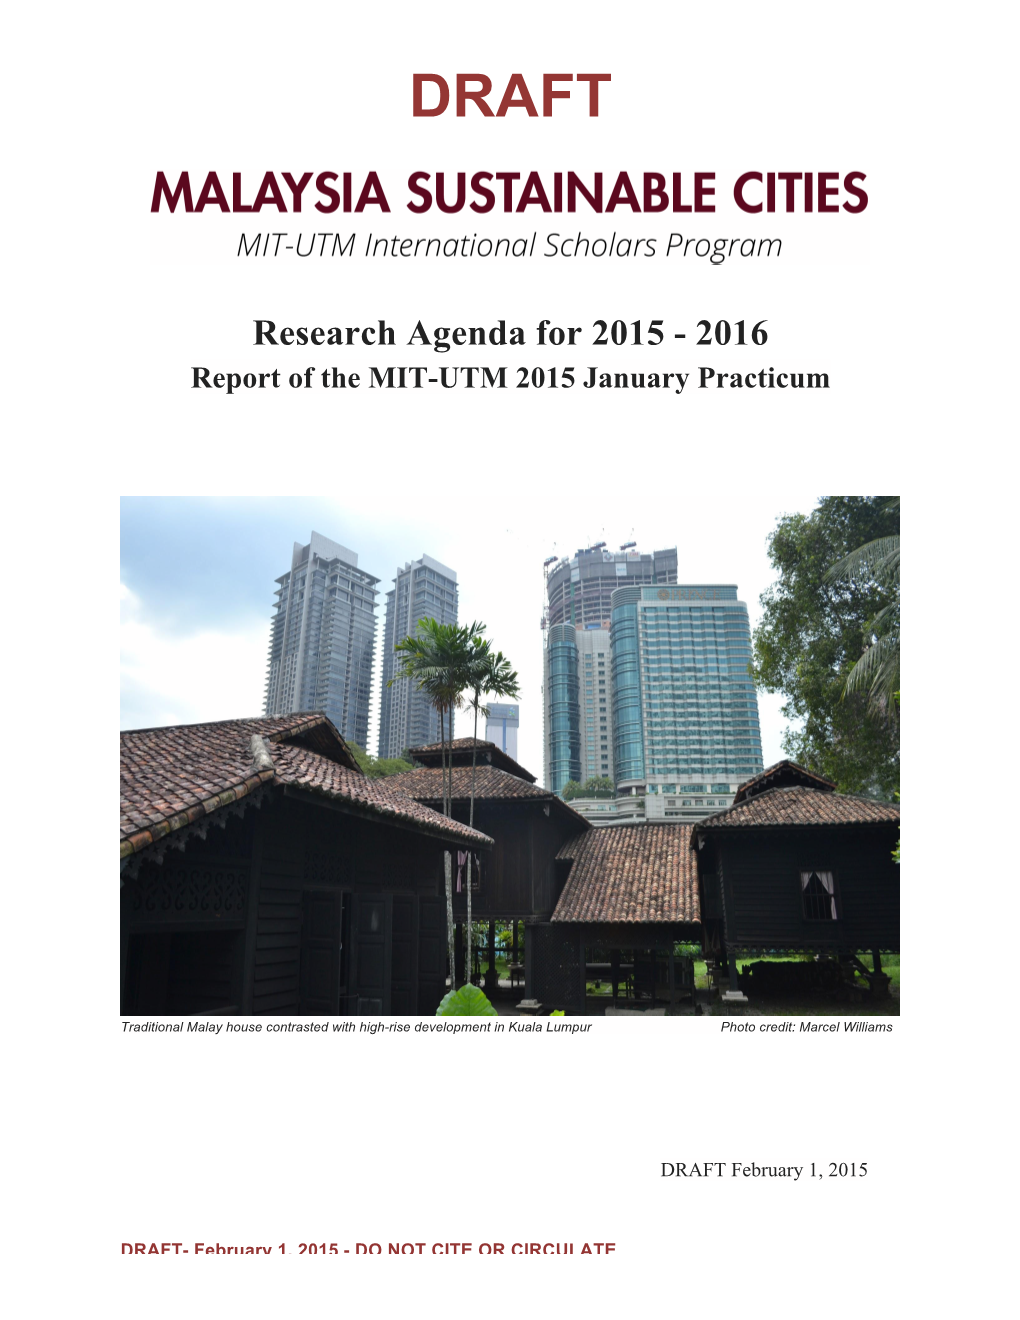 Research Agenda for 2015 - 2016